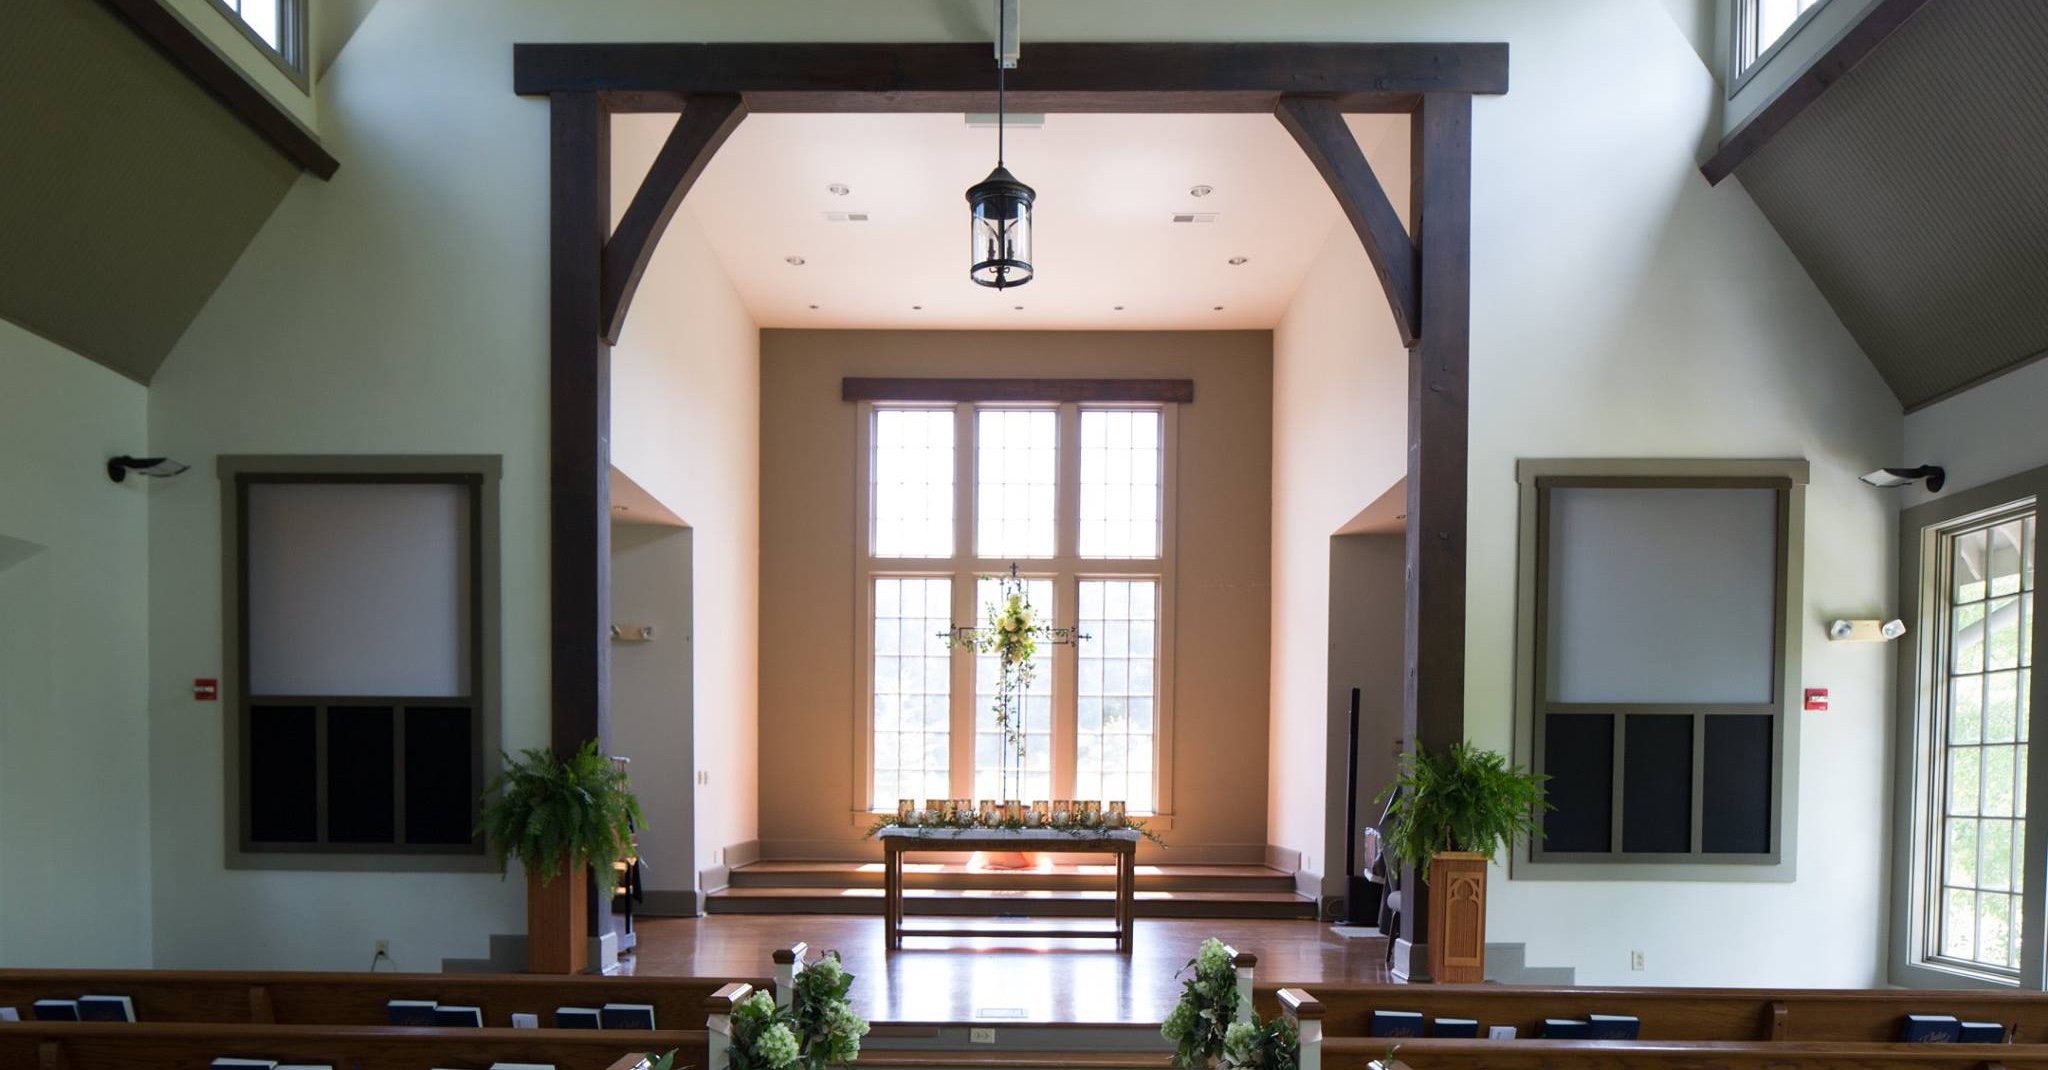 Interior view of sanctuary